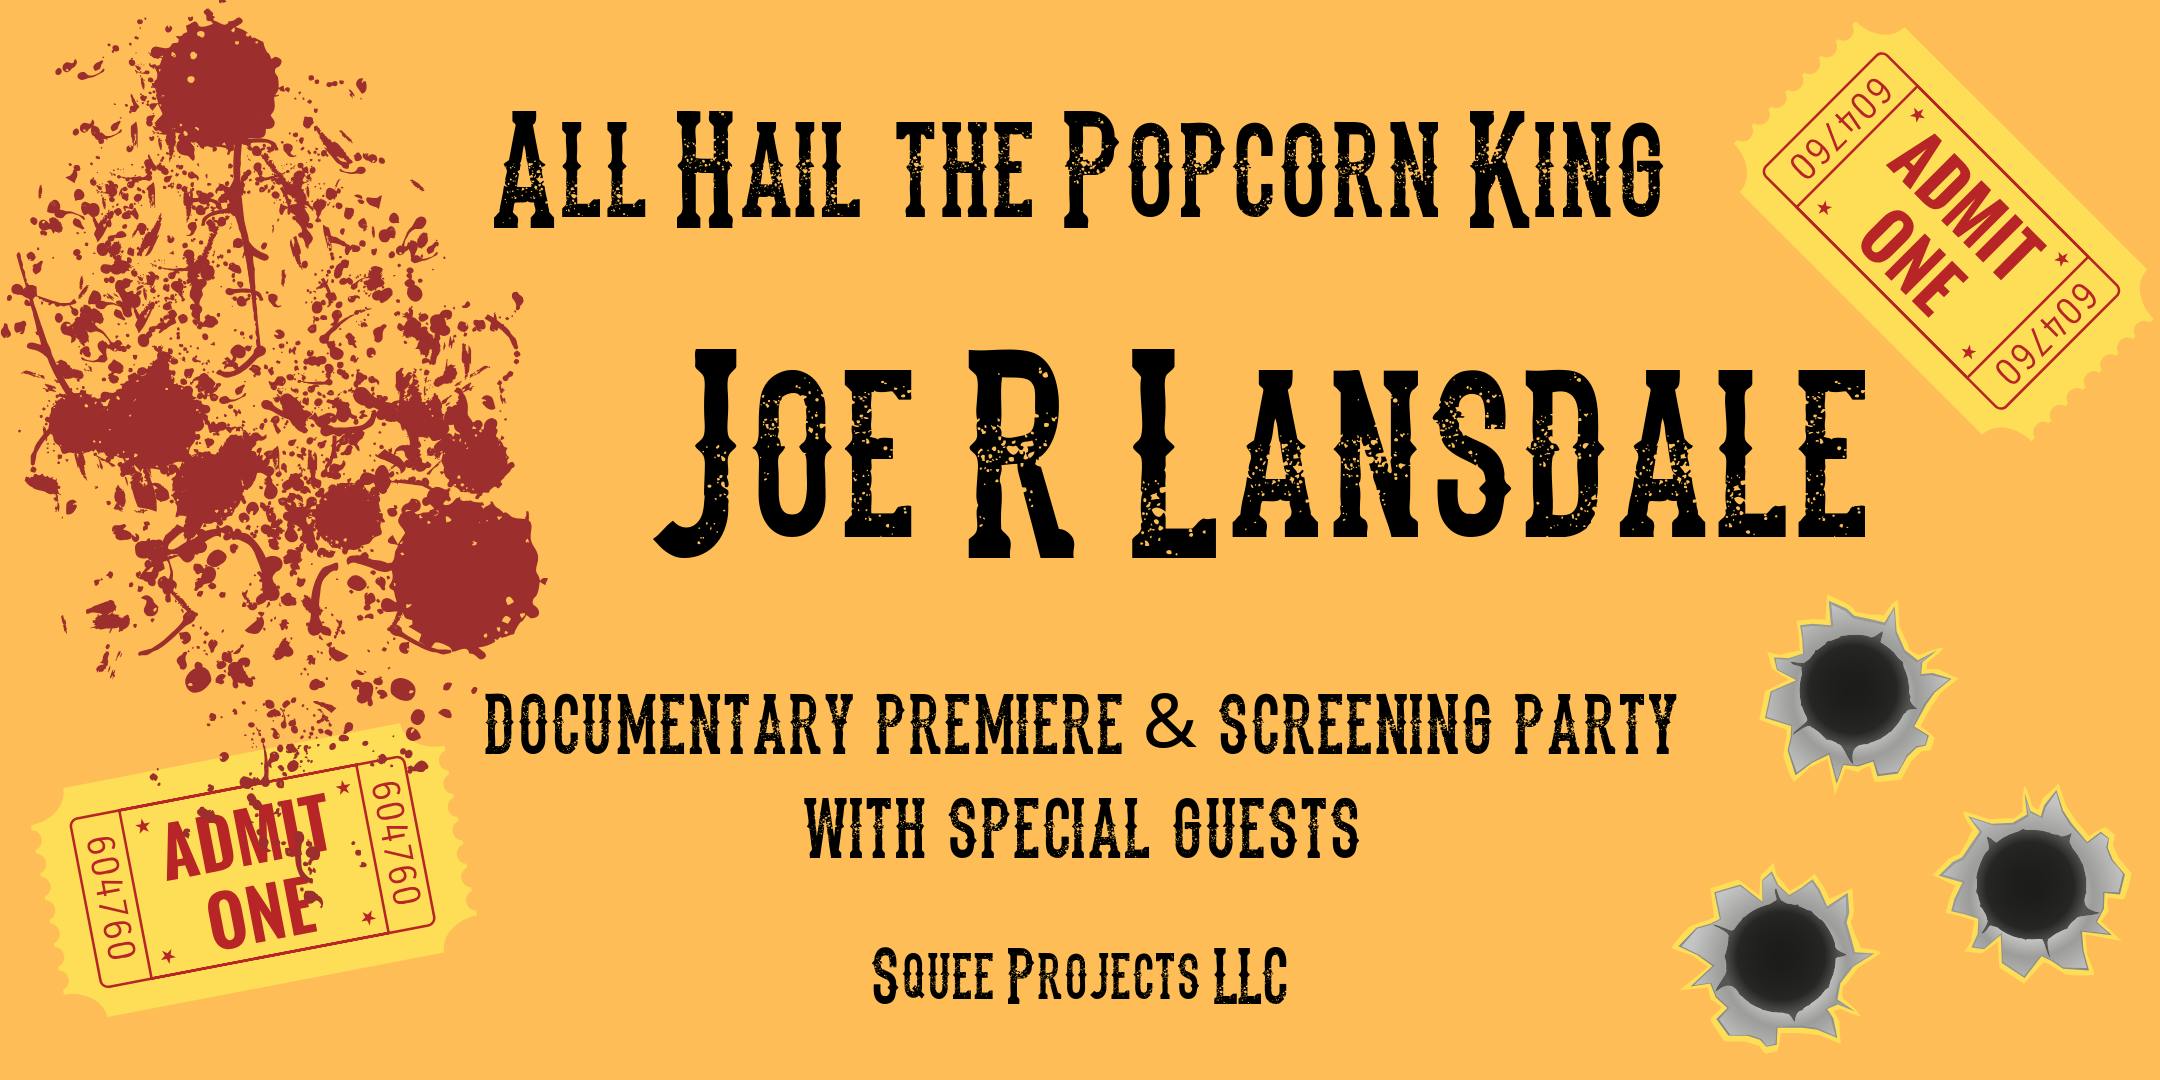 Joe Lansdale Documentary Premiere Screening Party